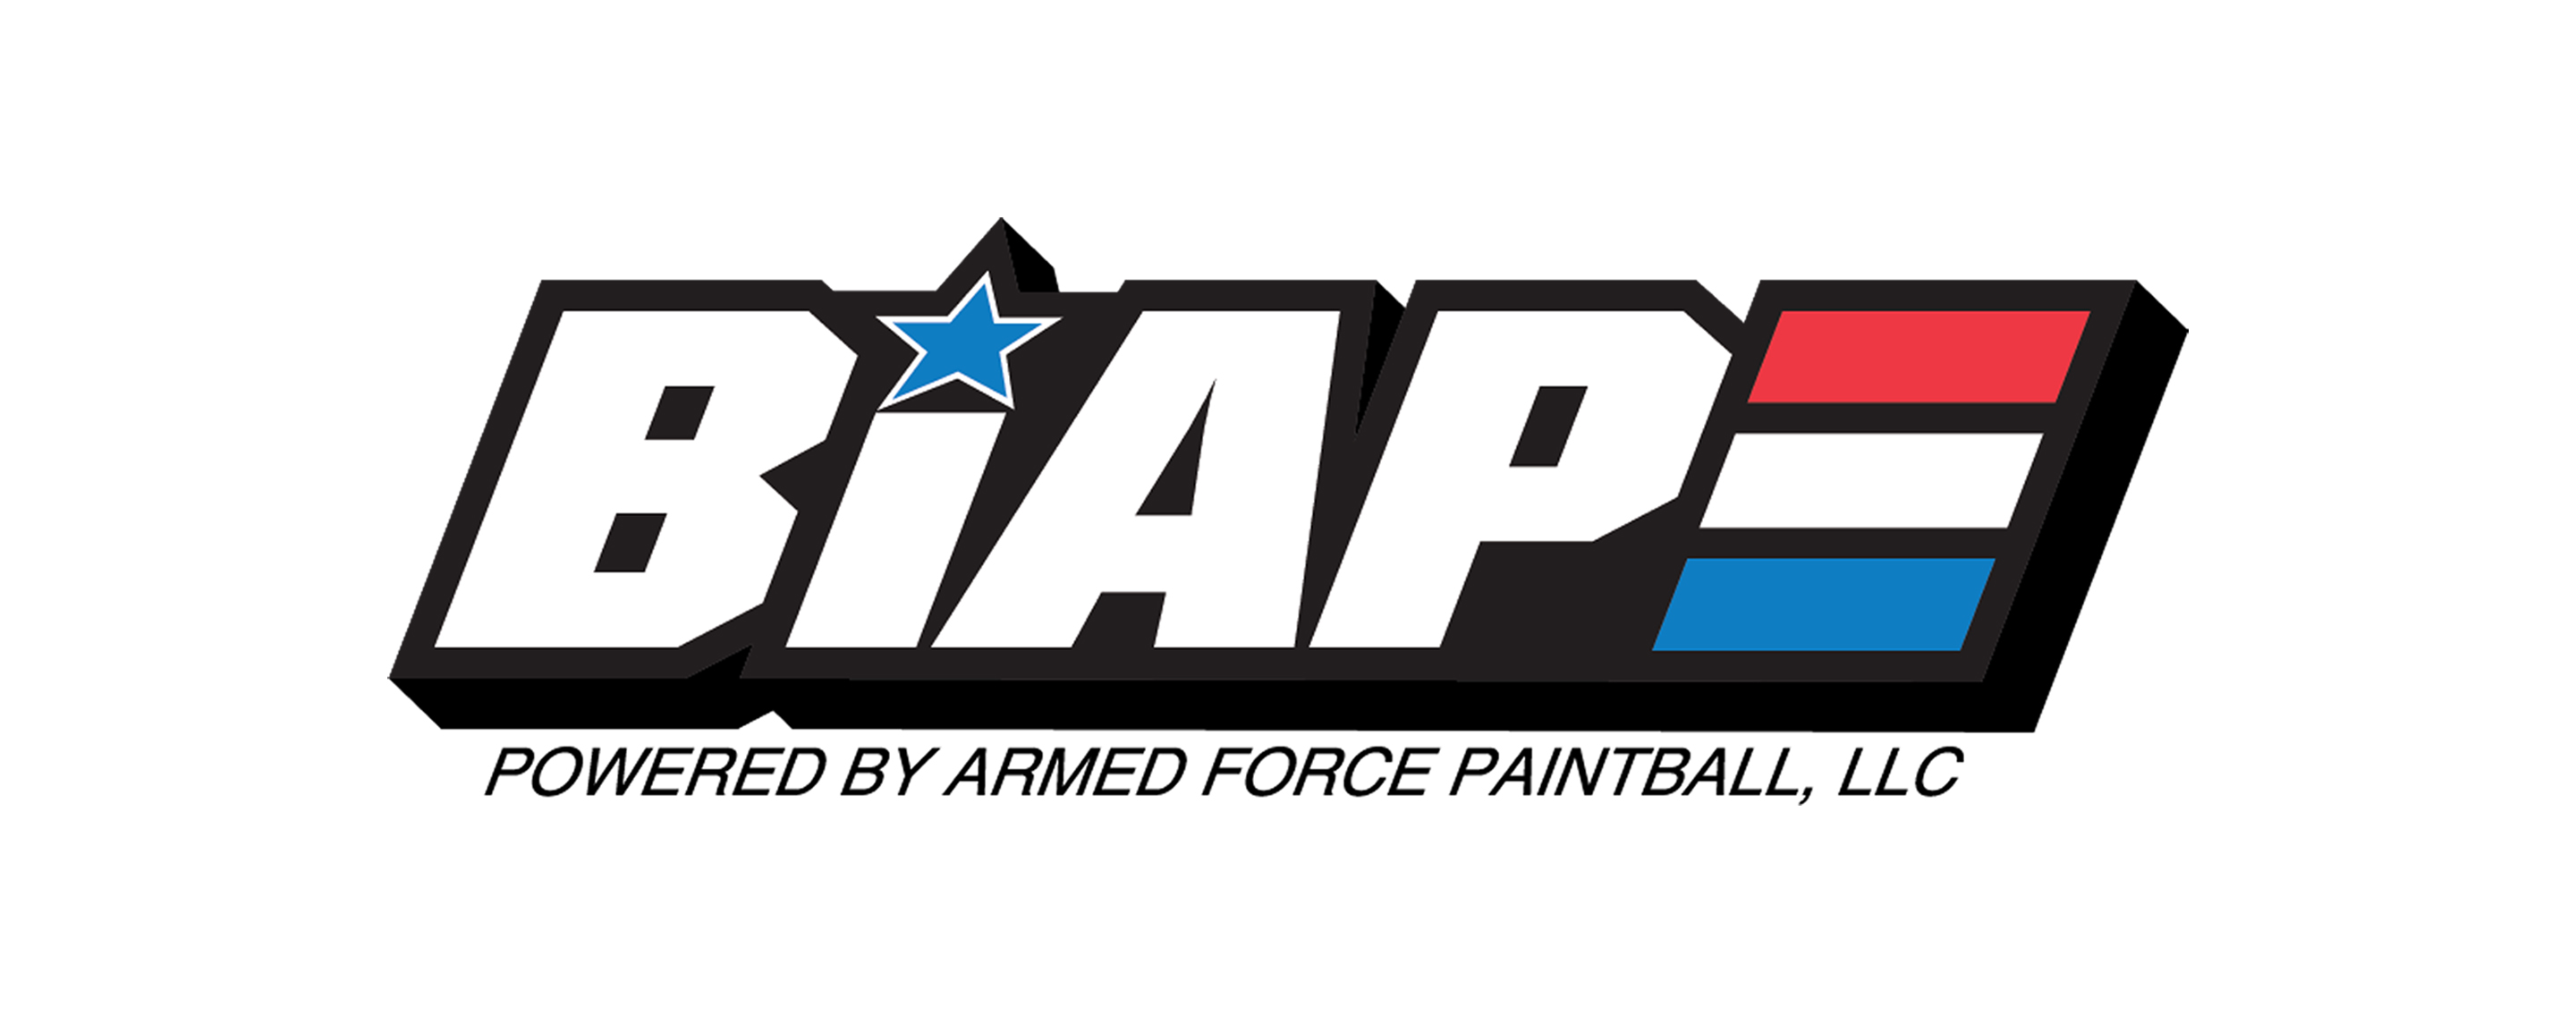 Armed Force Paintball LLC